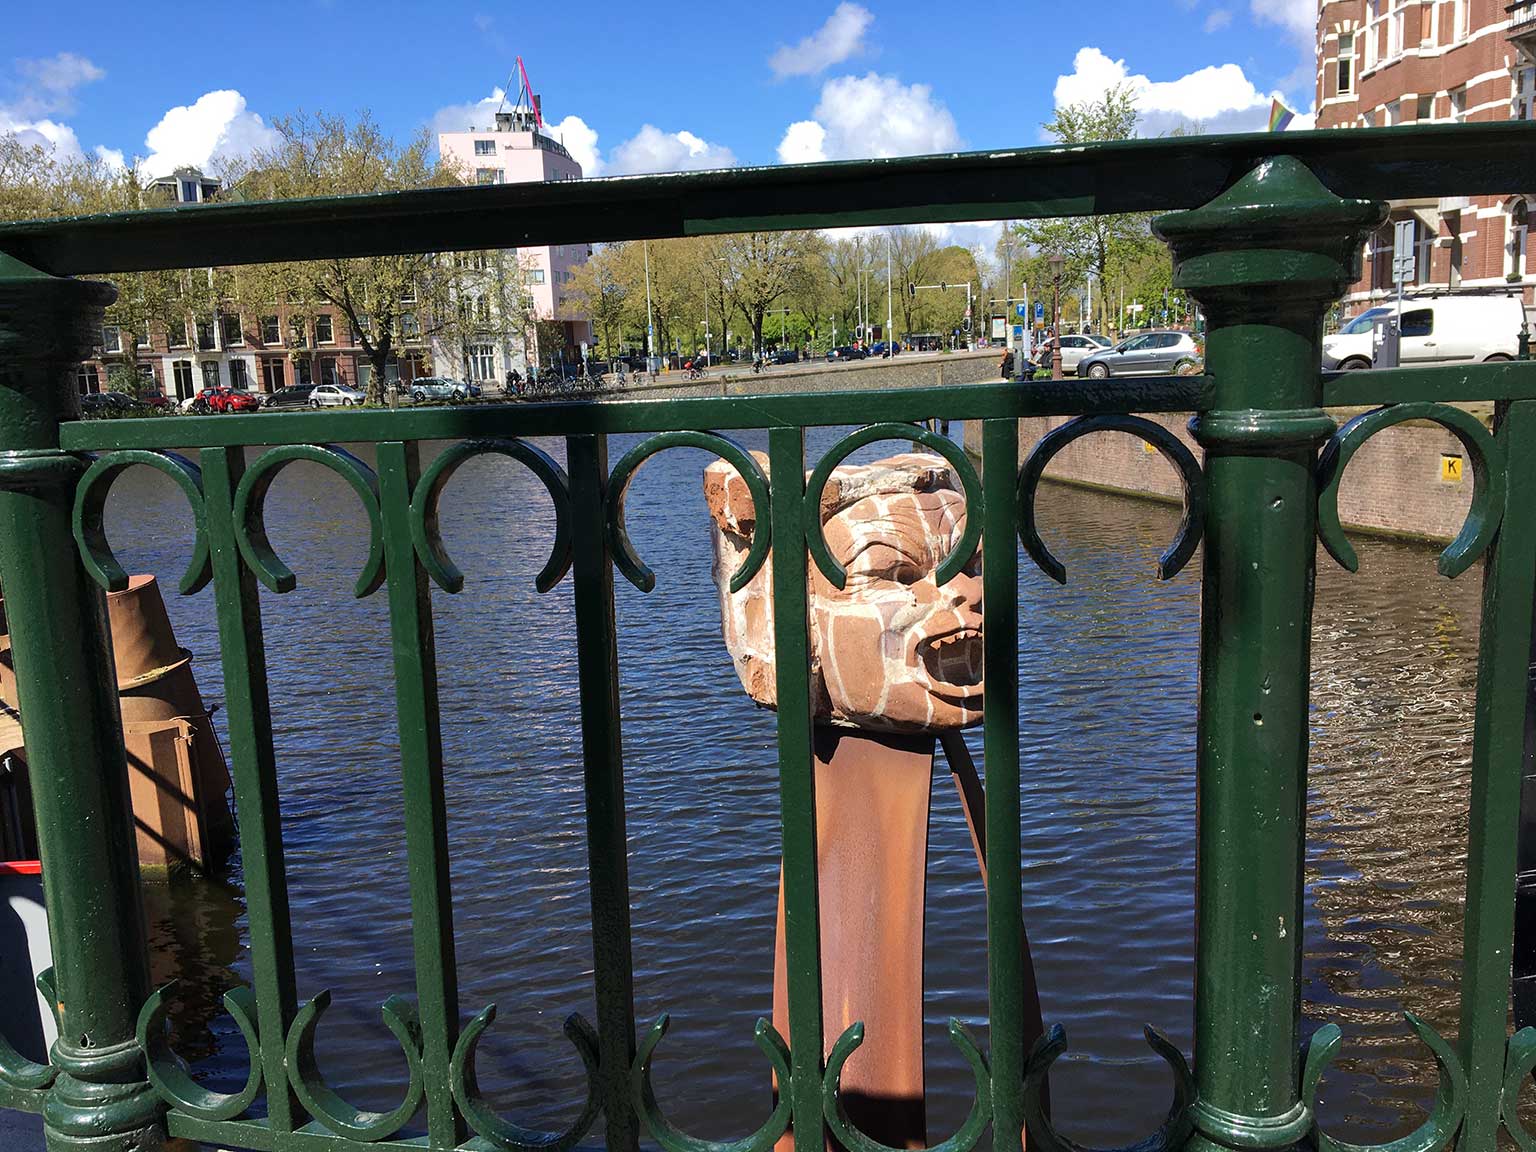 Bullebak statue viewed through the railing of bridge 149, Amsterdam